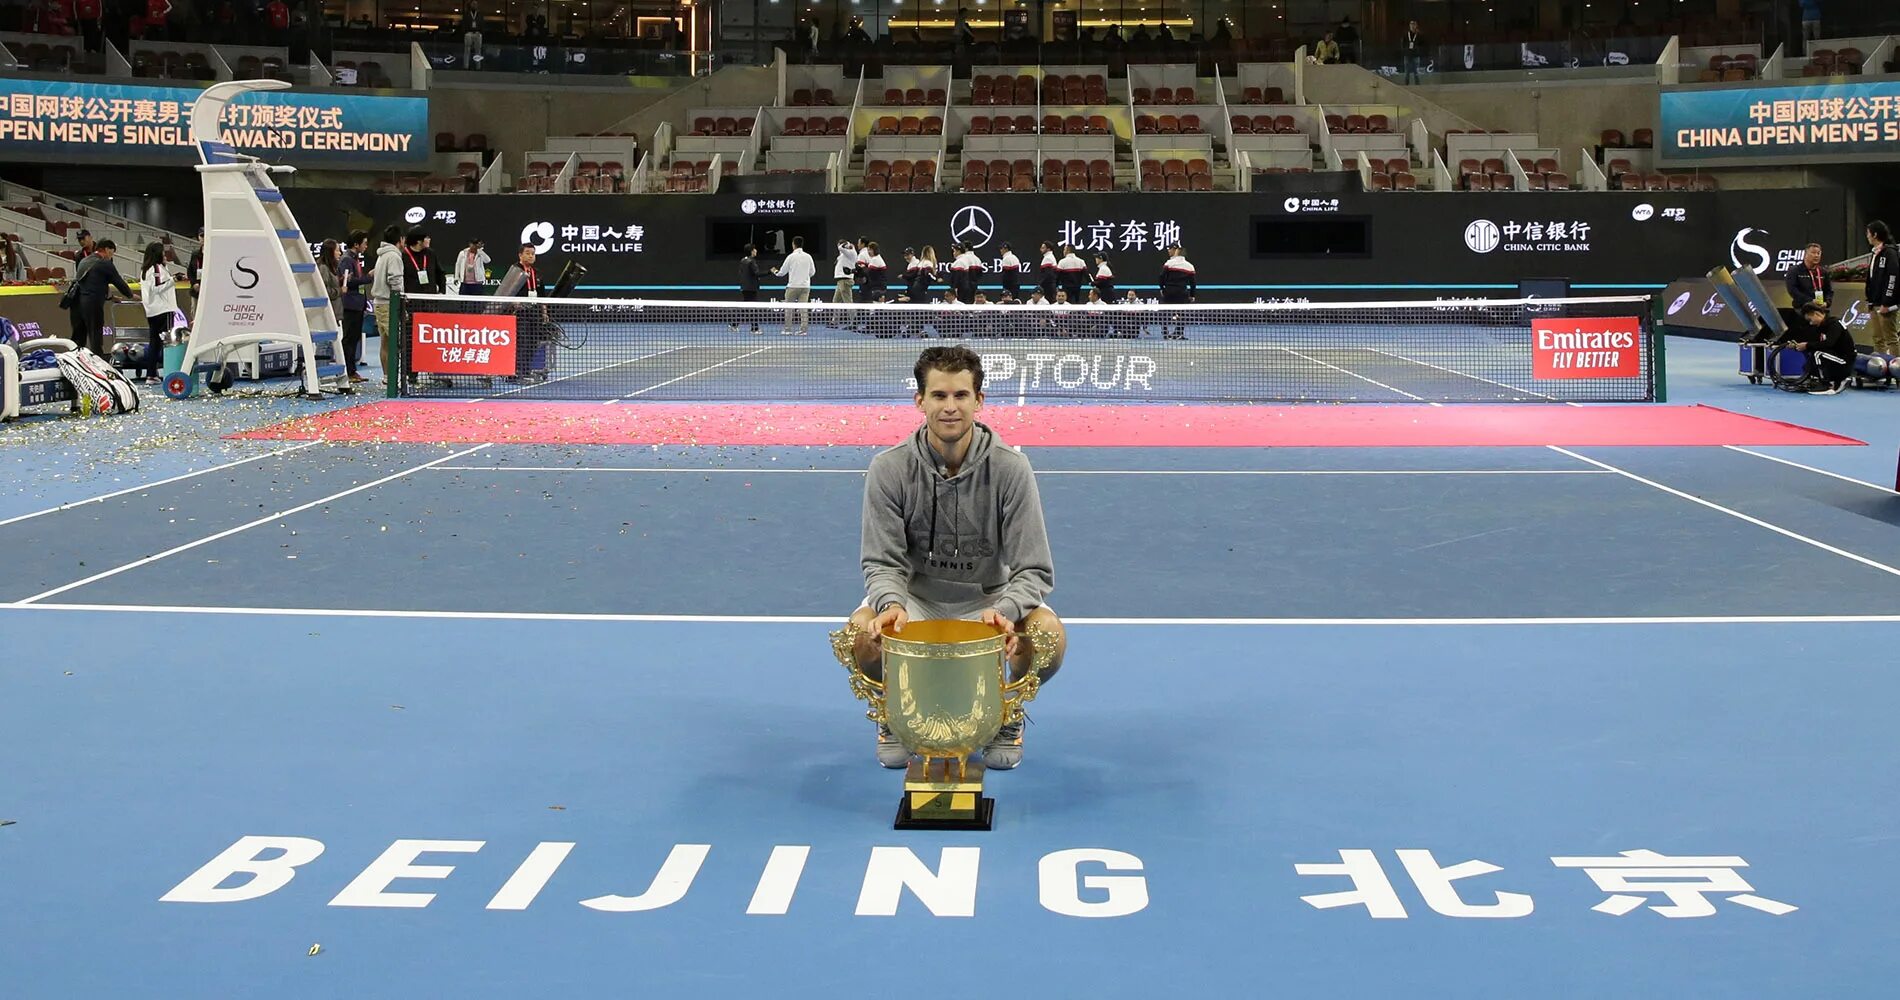 China National Tennis Center.